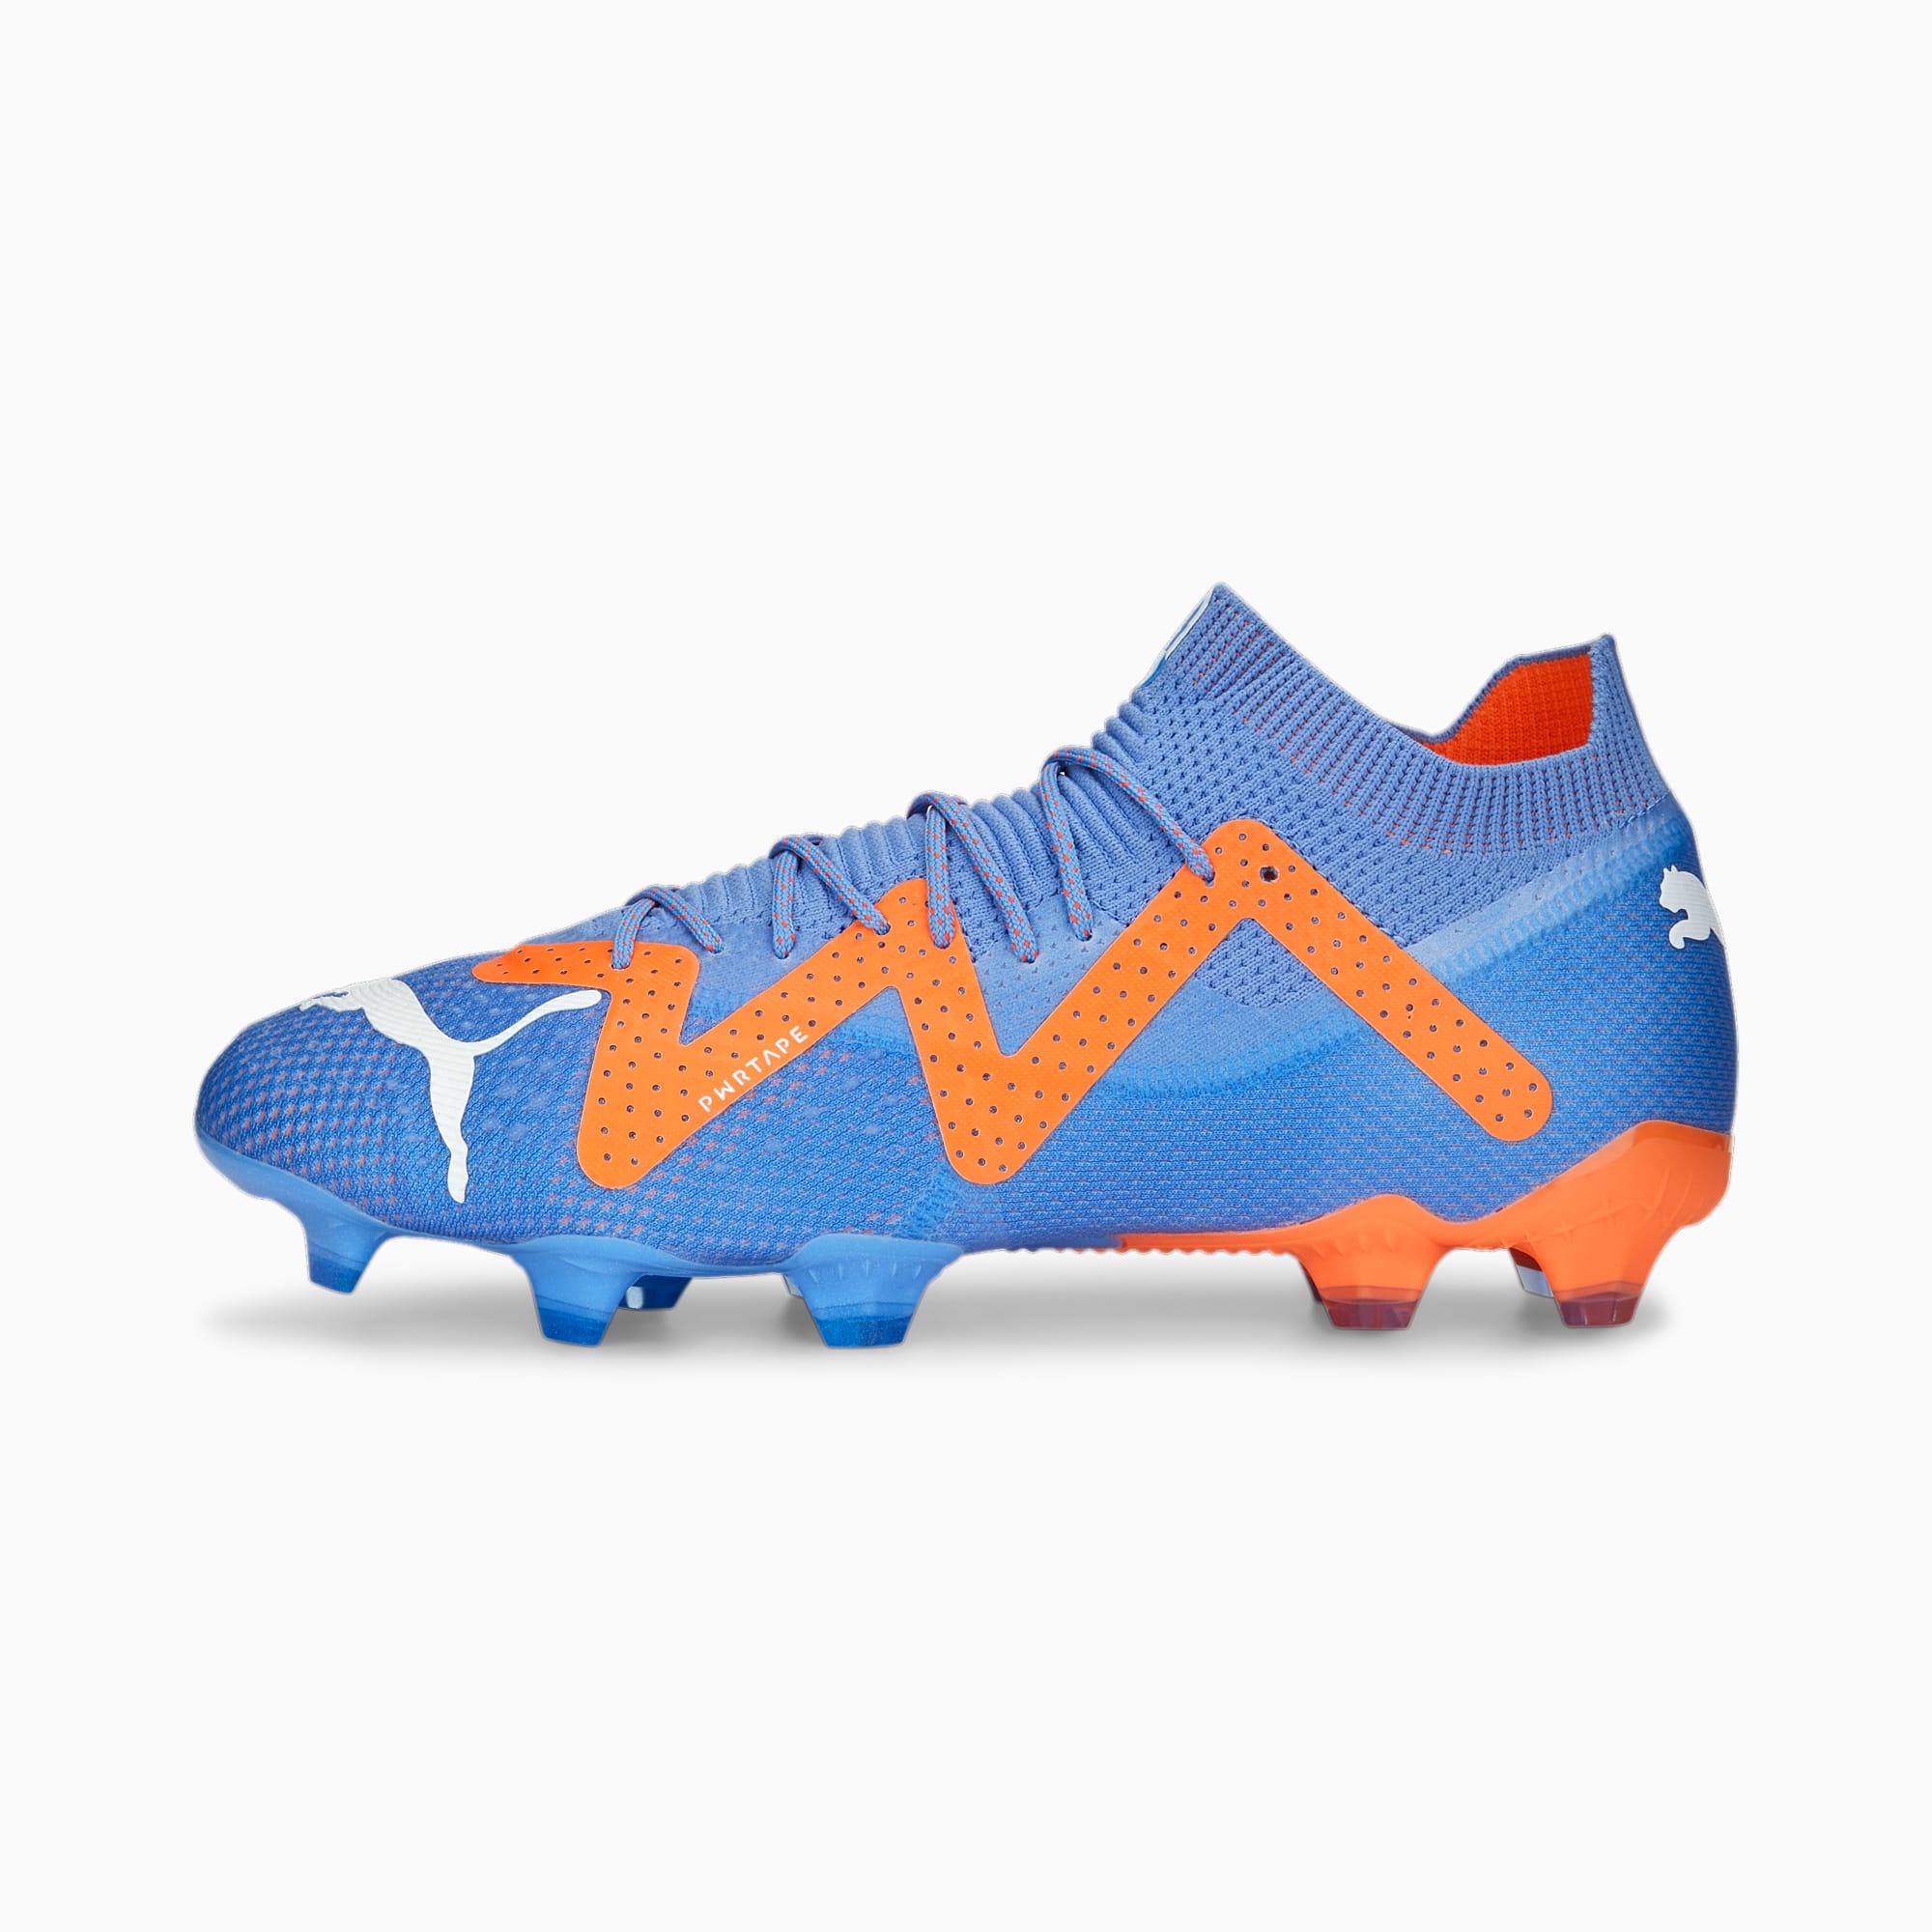 FUTURE ULTIMATE FG/AG Football Boots | Blue Glimmer-PUMA White-Ultra ...